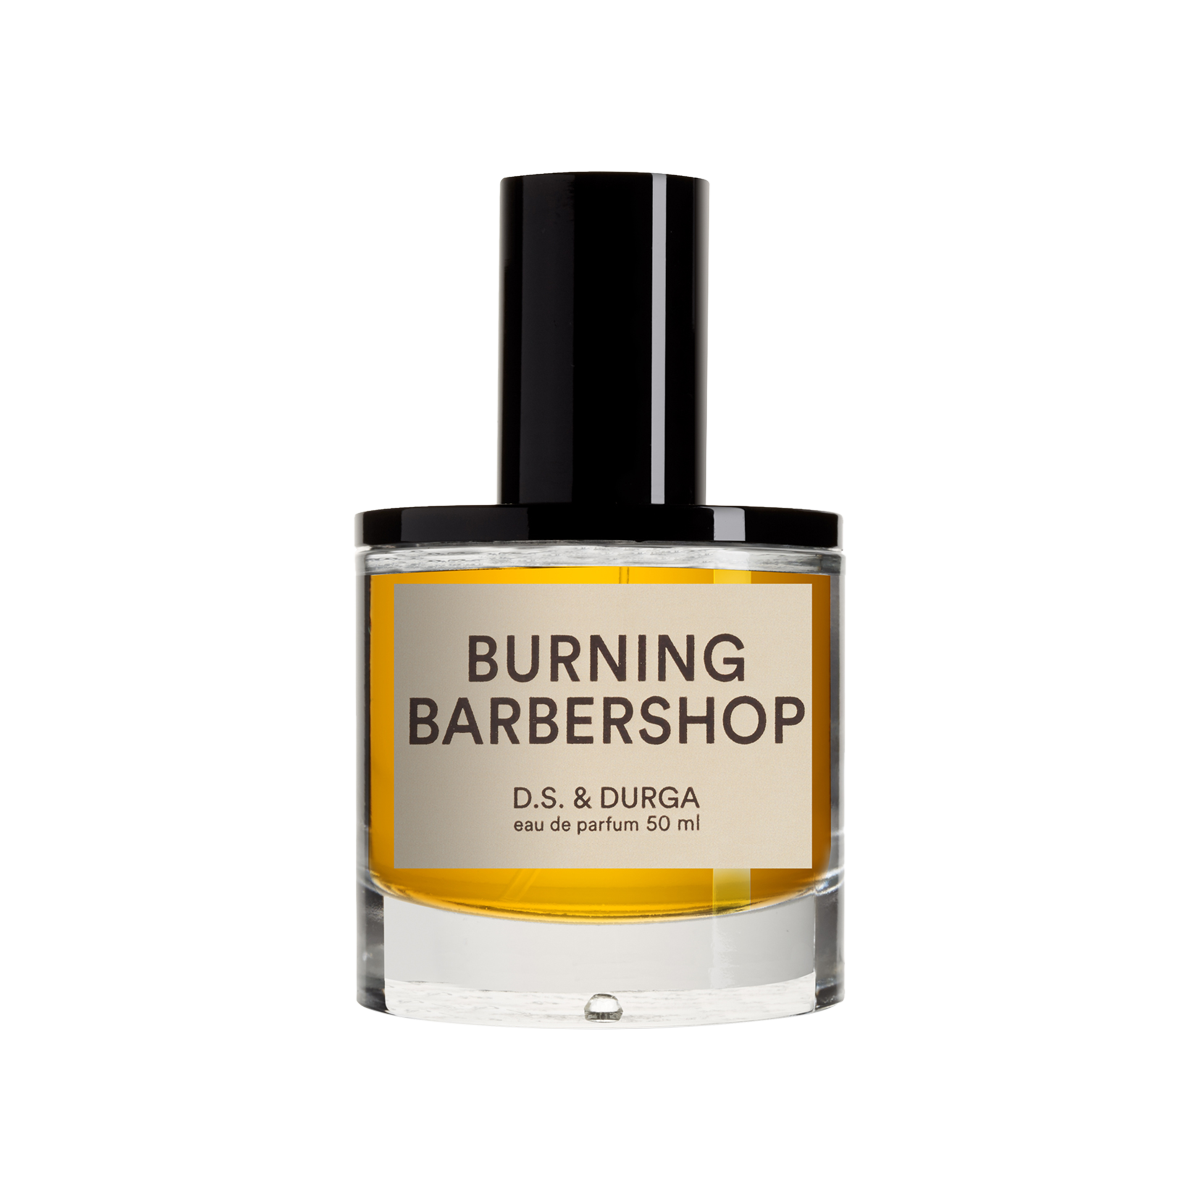 D.S. & DURGA - Burning Barbershop Eau de Parfum